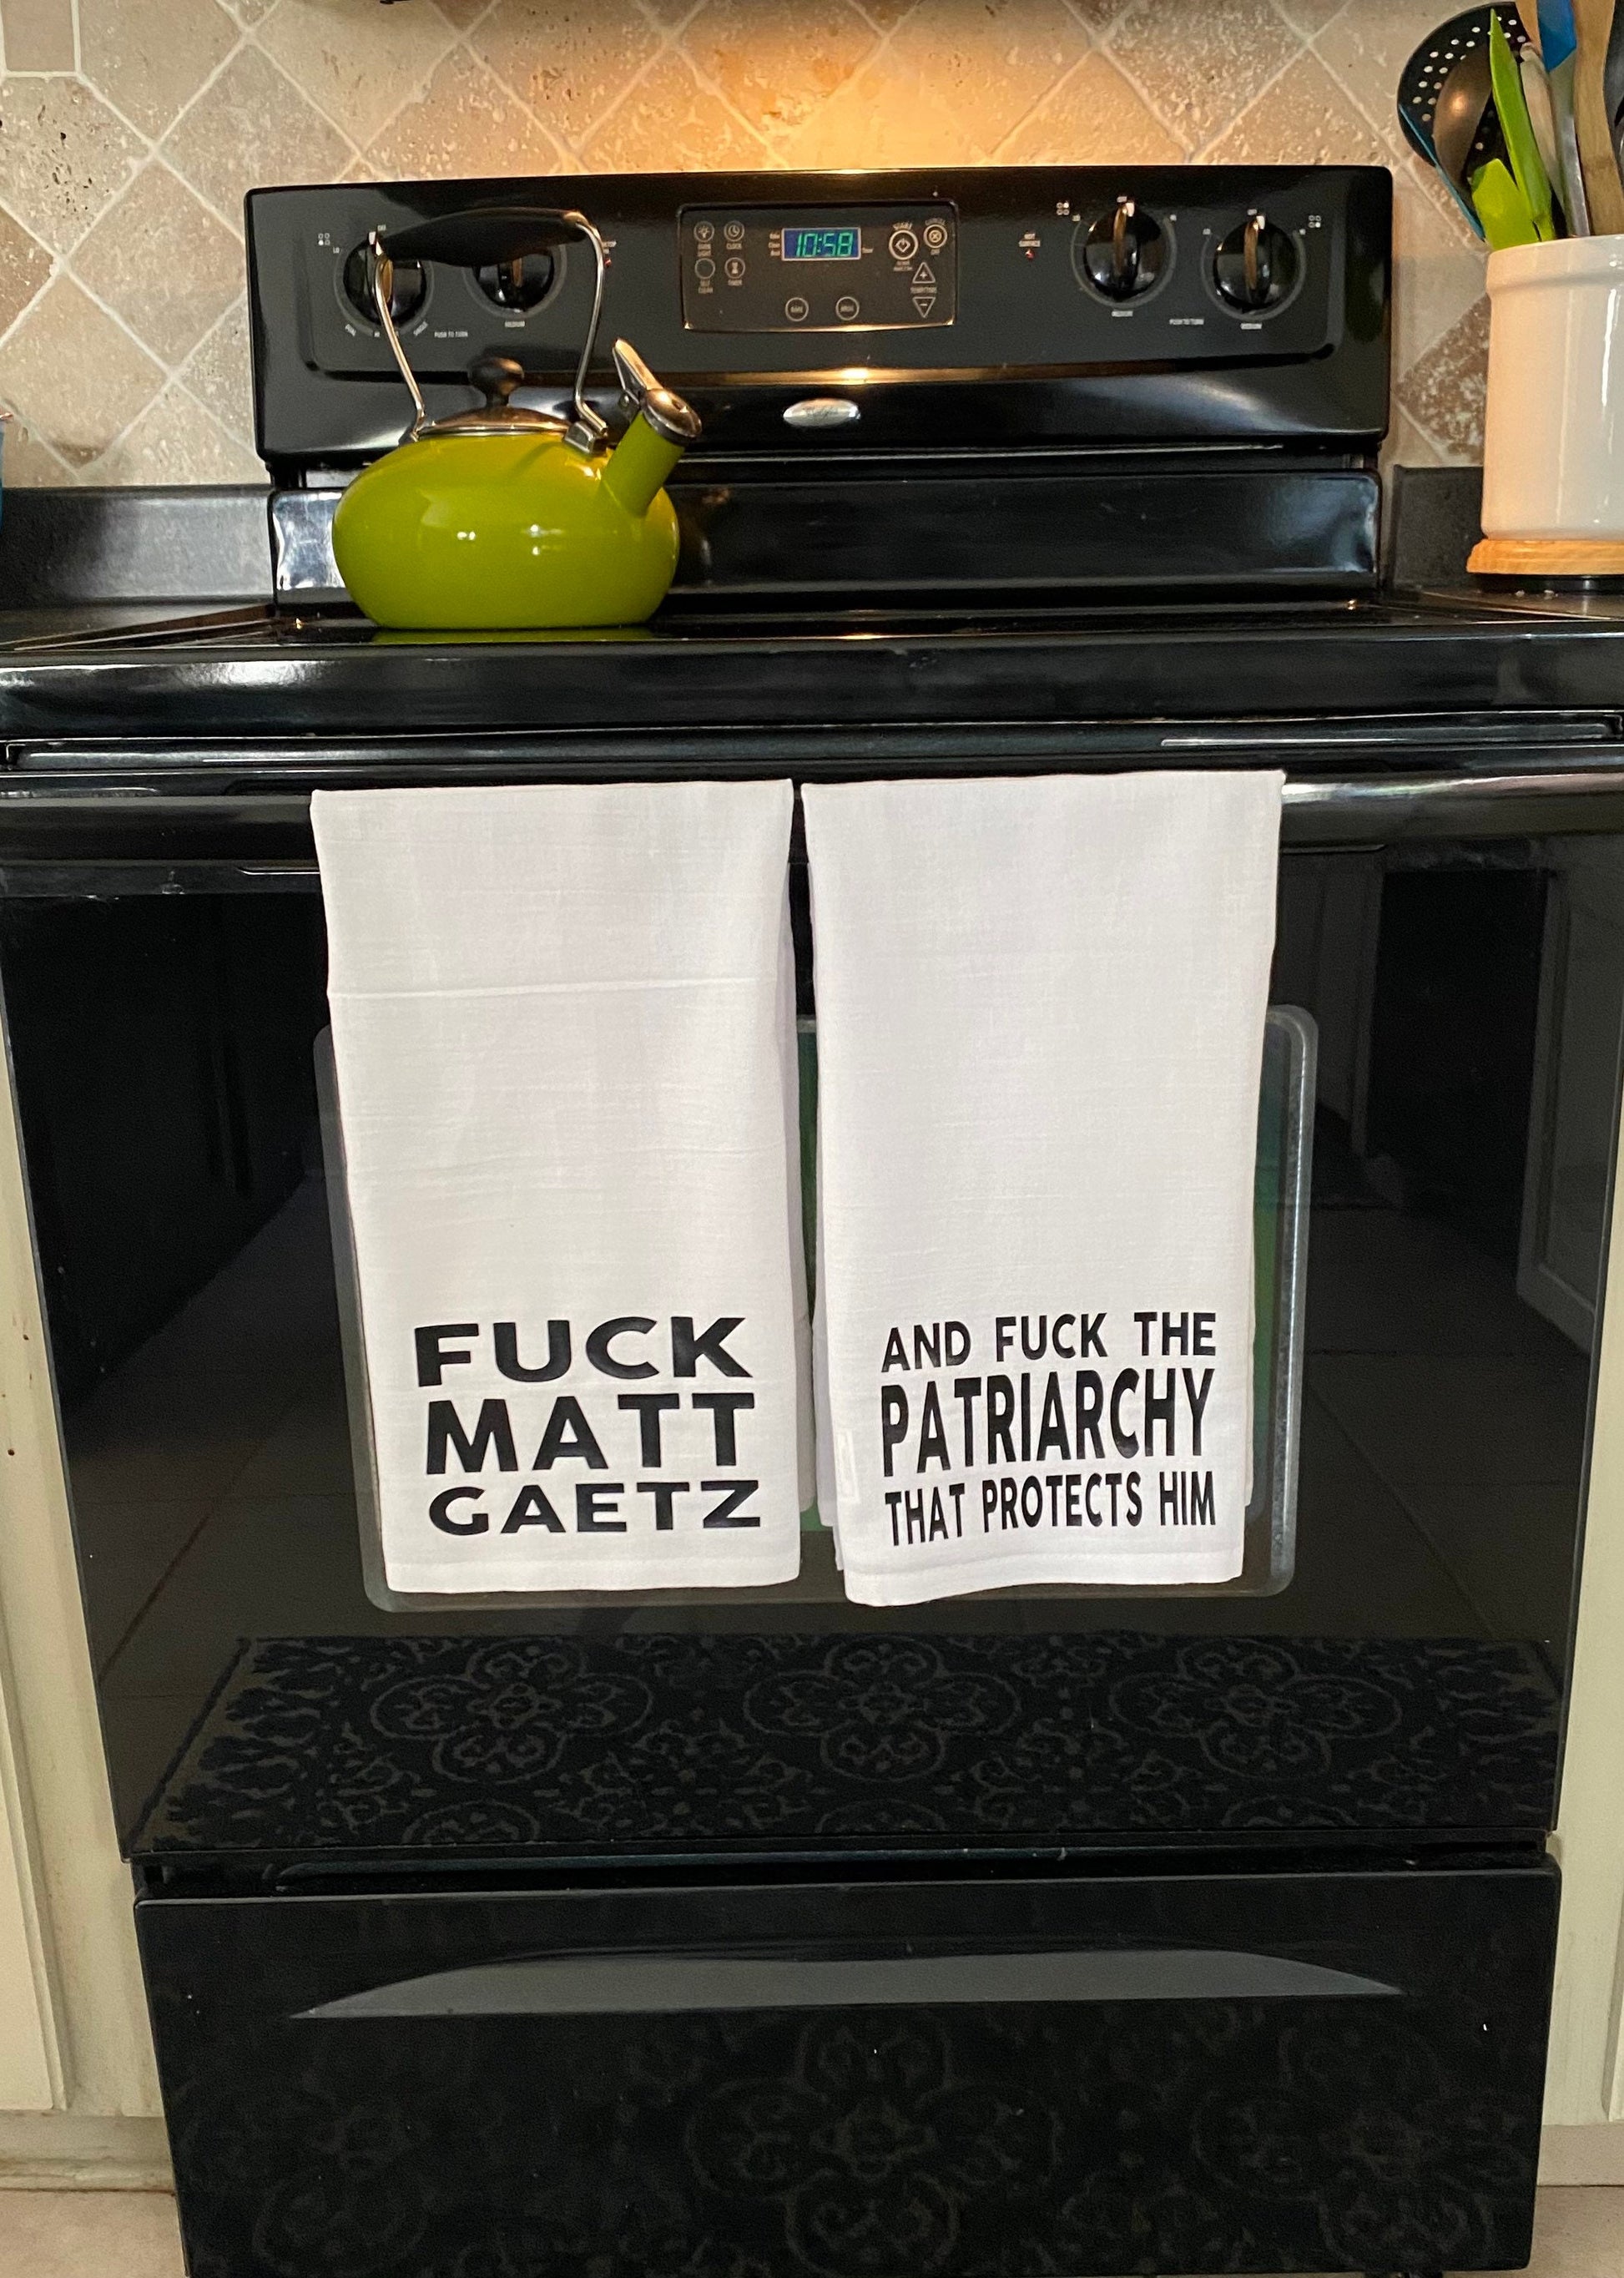 Fuck Gaetz and the Patriarchy Too Tea Towel Set, with options kavanaugh, Jordan, Trump